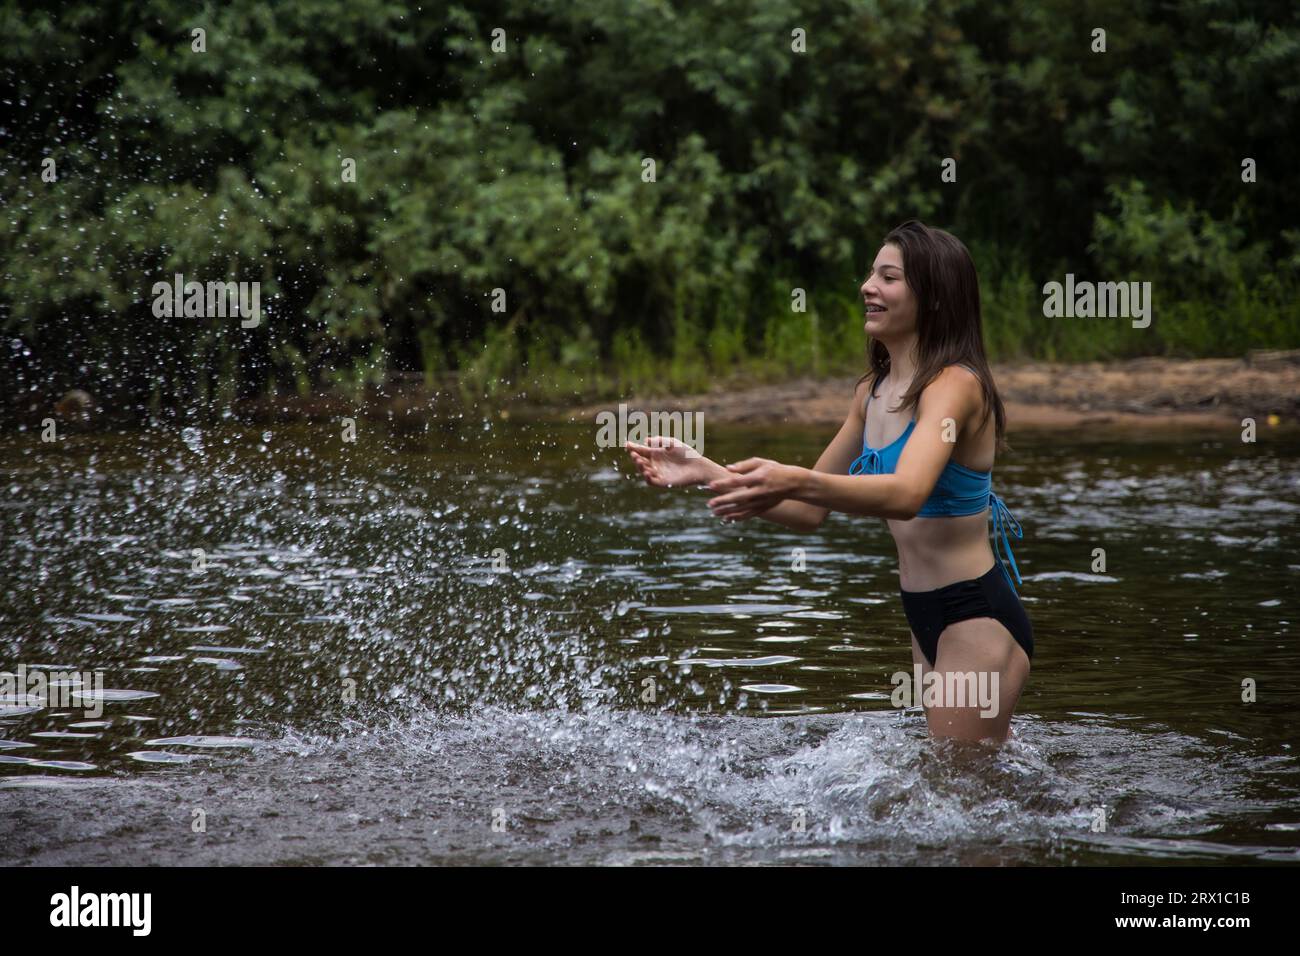 Teenage girl splashing water in a river Stock Photo